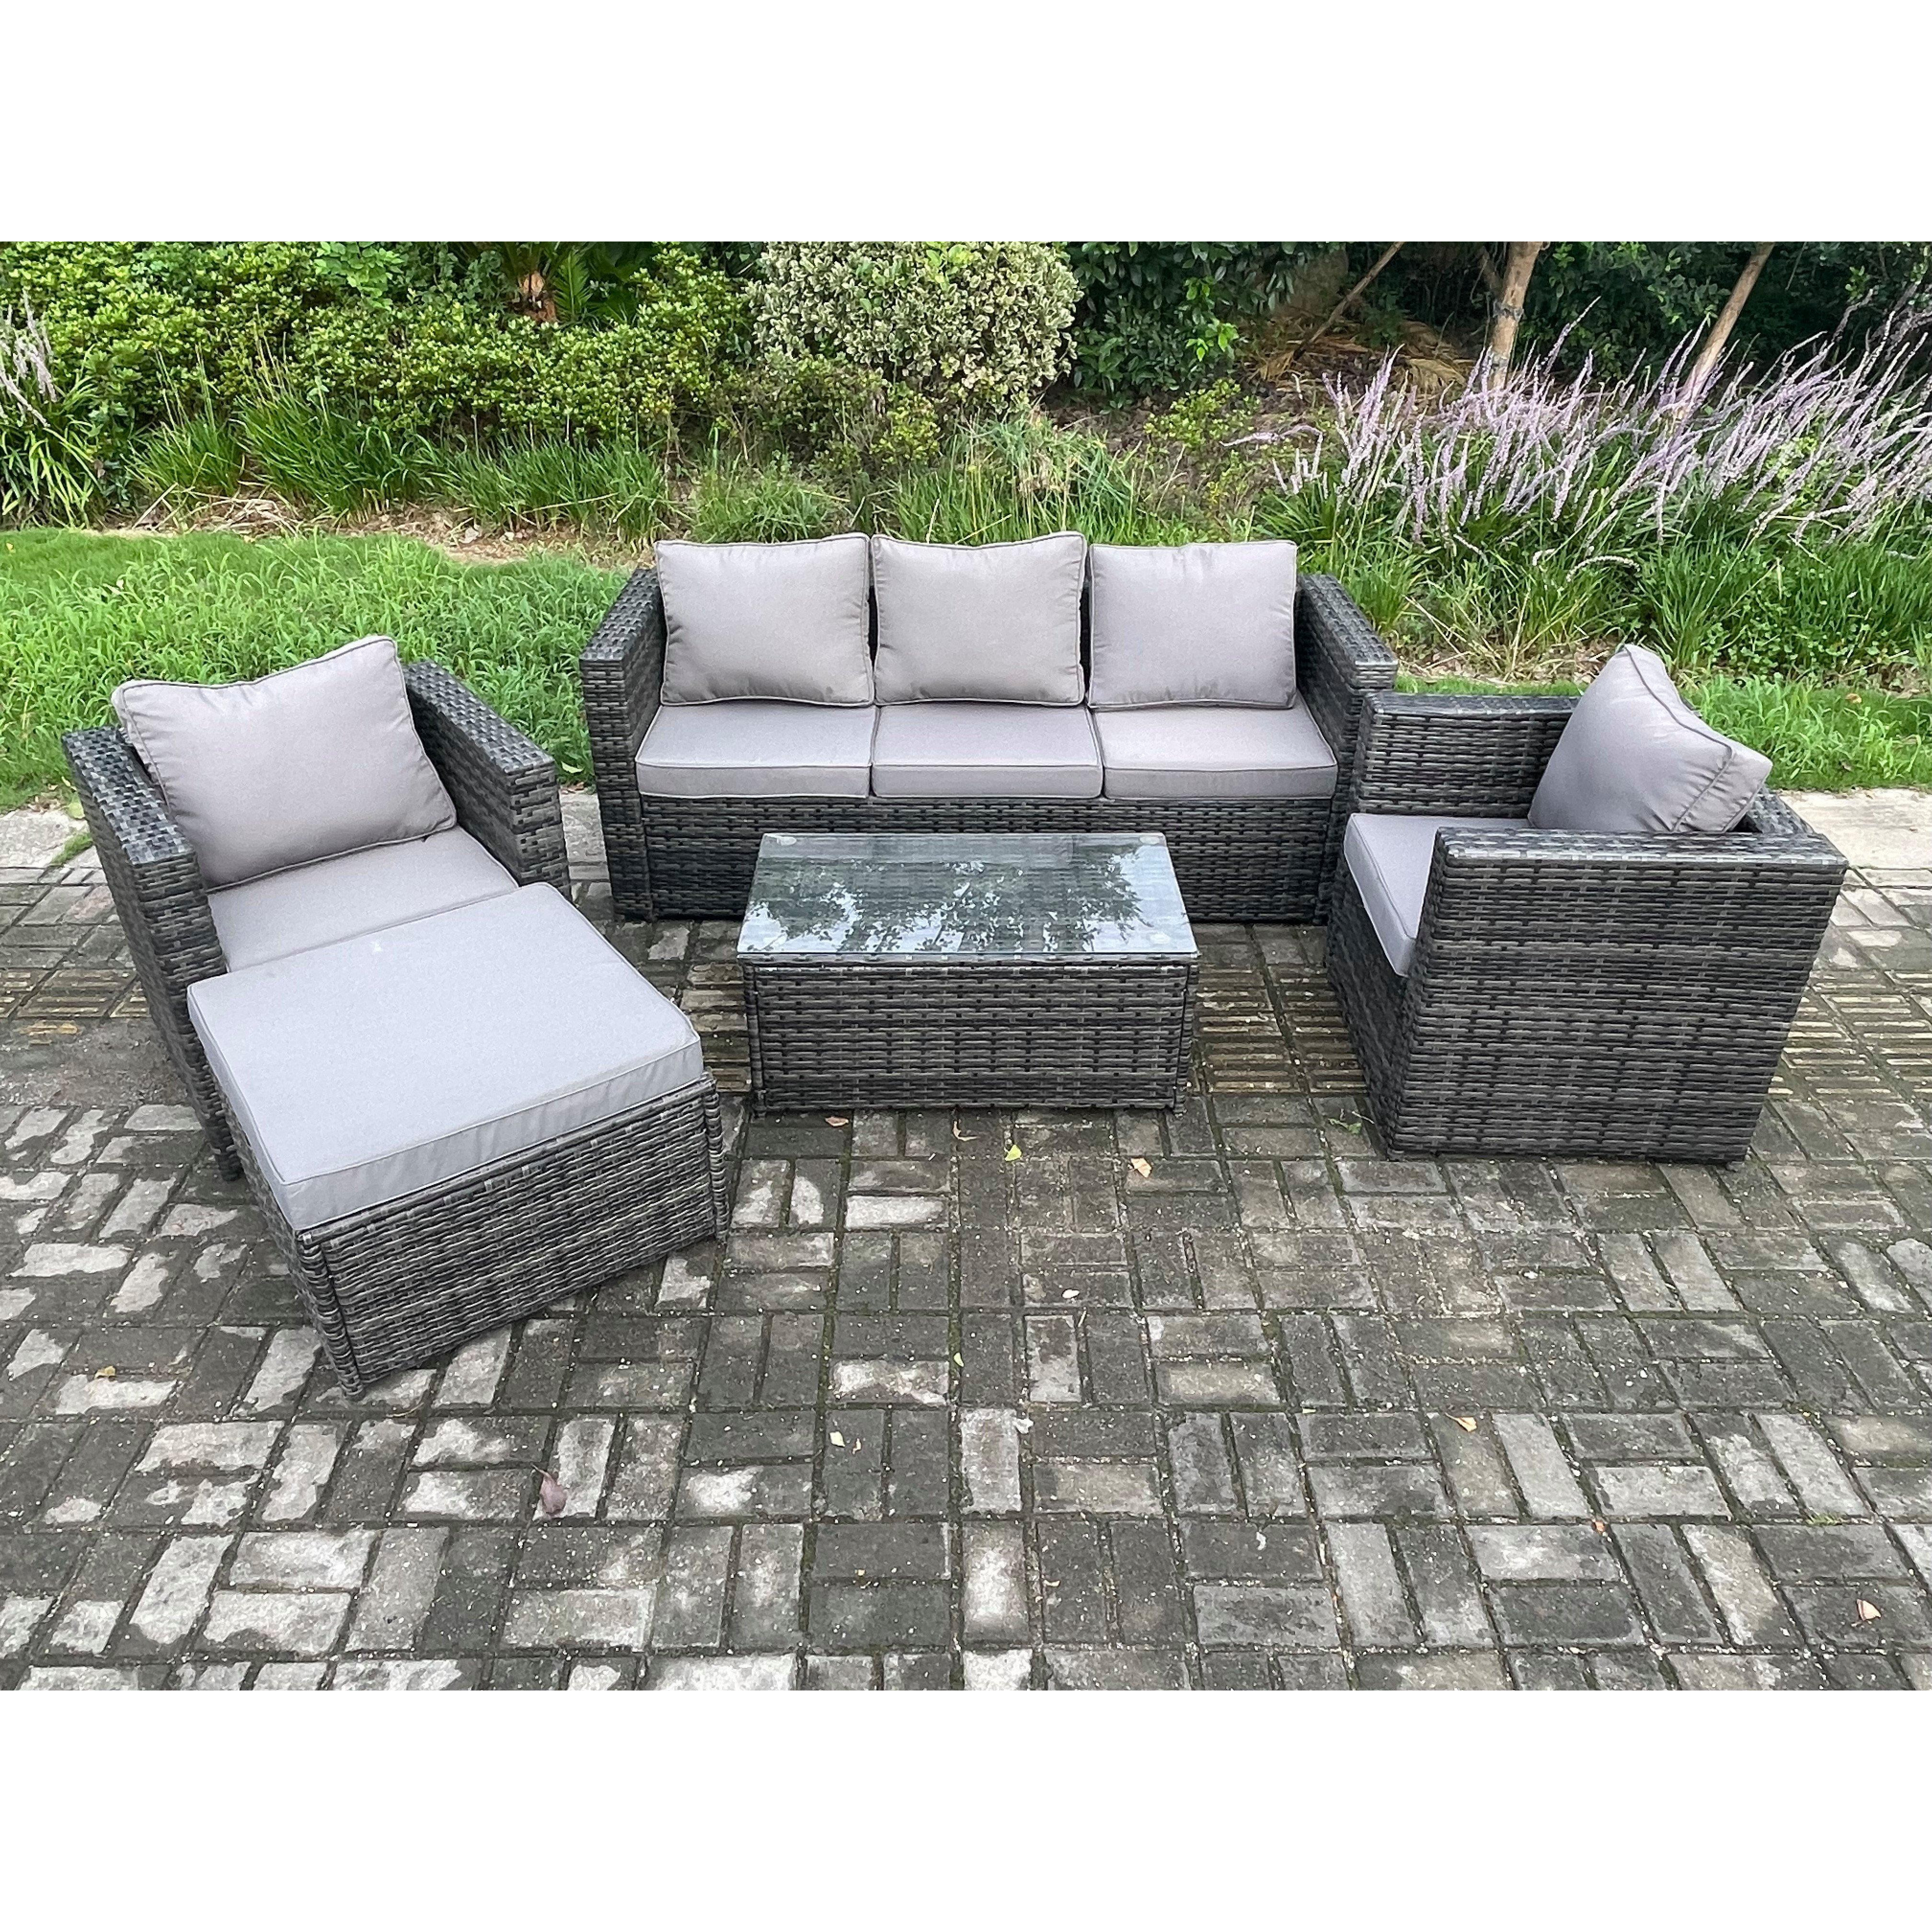 Rattan Garden Furniture Set with Coffee Table 2 Armchairs Big Footstool Indoor Outdoor Patio Lounge Sofa Set - image 1